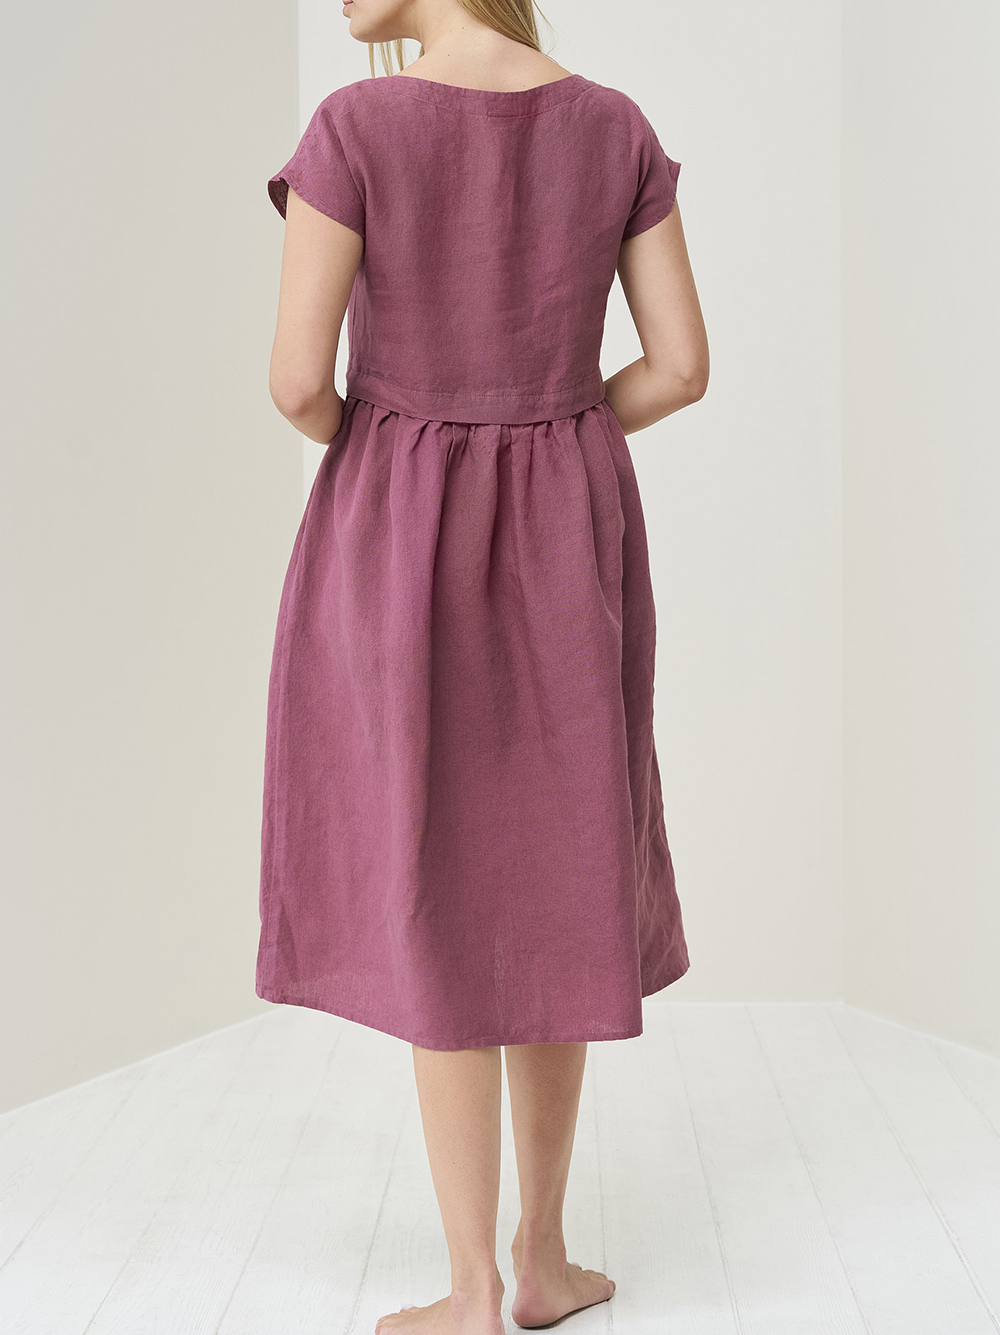 COZINEN Women's Solid Color Round Neck Short Sleeve Pocket Dress